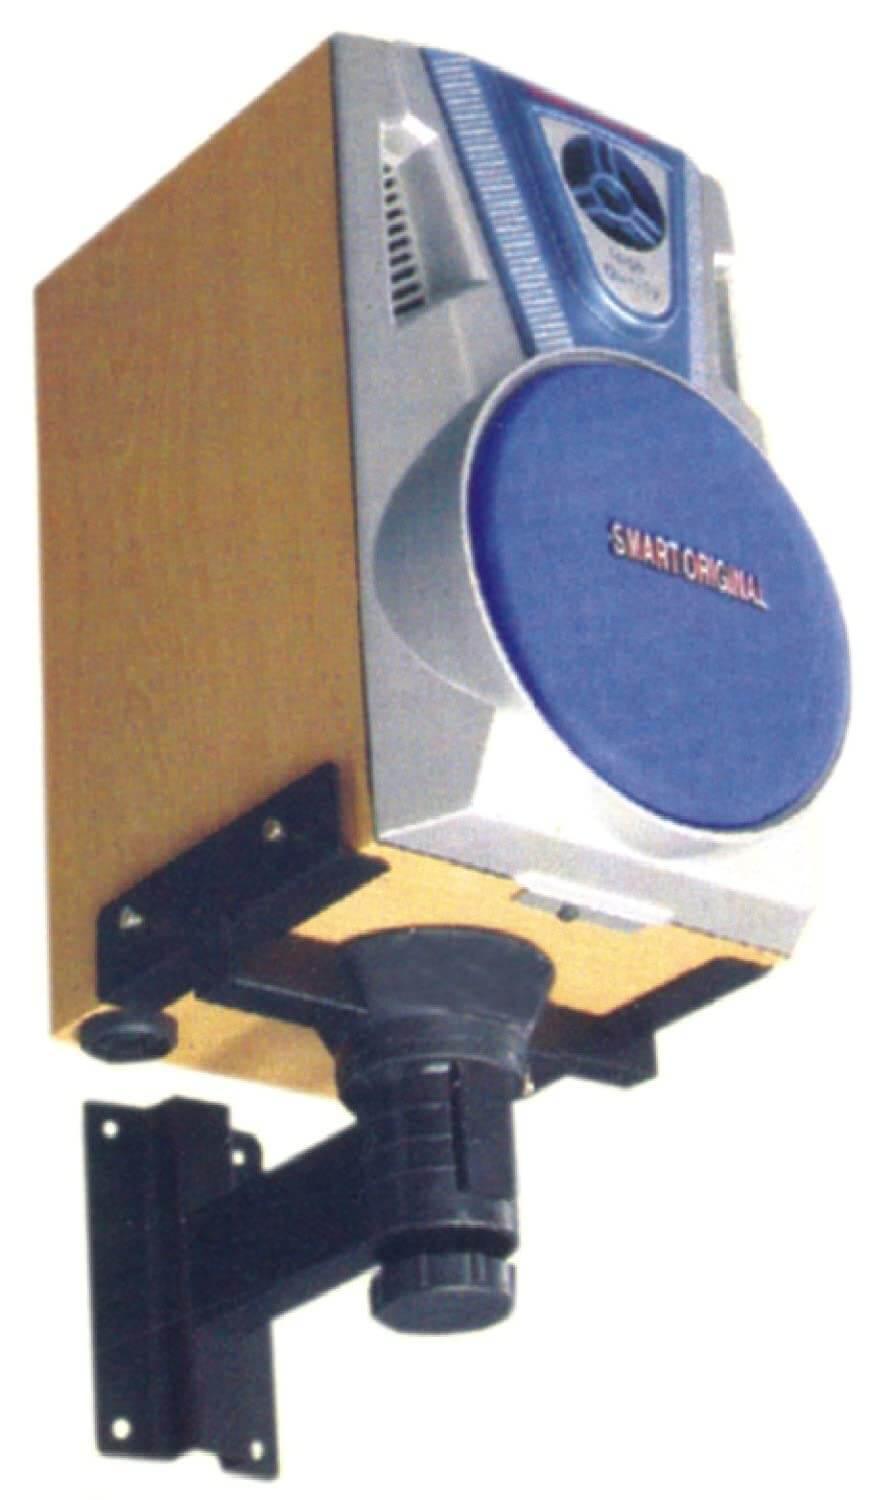 Wall Mount Speaker Bracket Universal Adjustable Stand for 8 - 12 inches speaker - GADGET WAGON Speaker Stands & Mounts